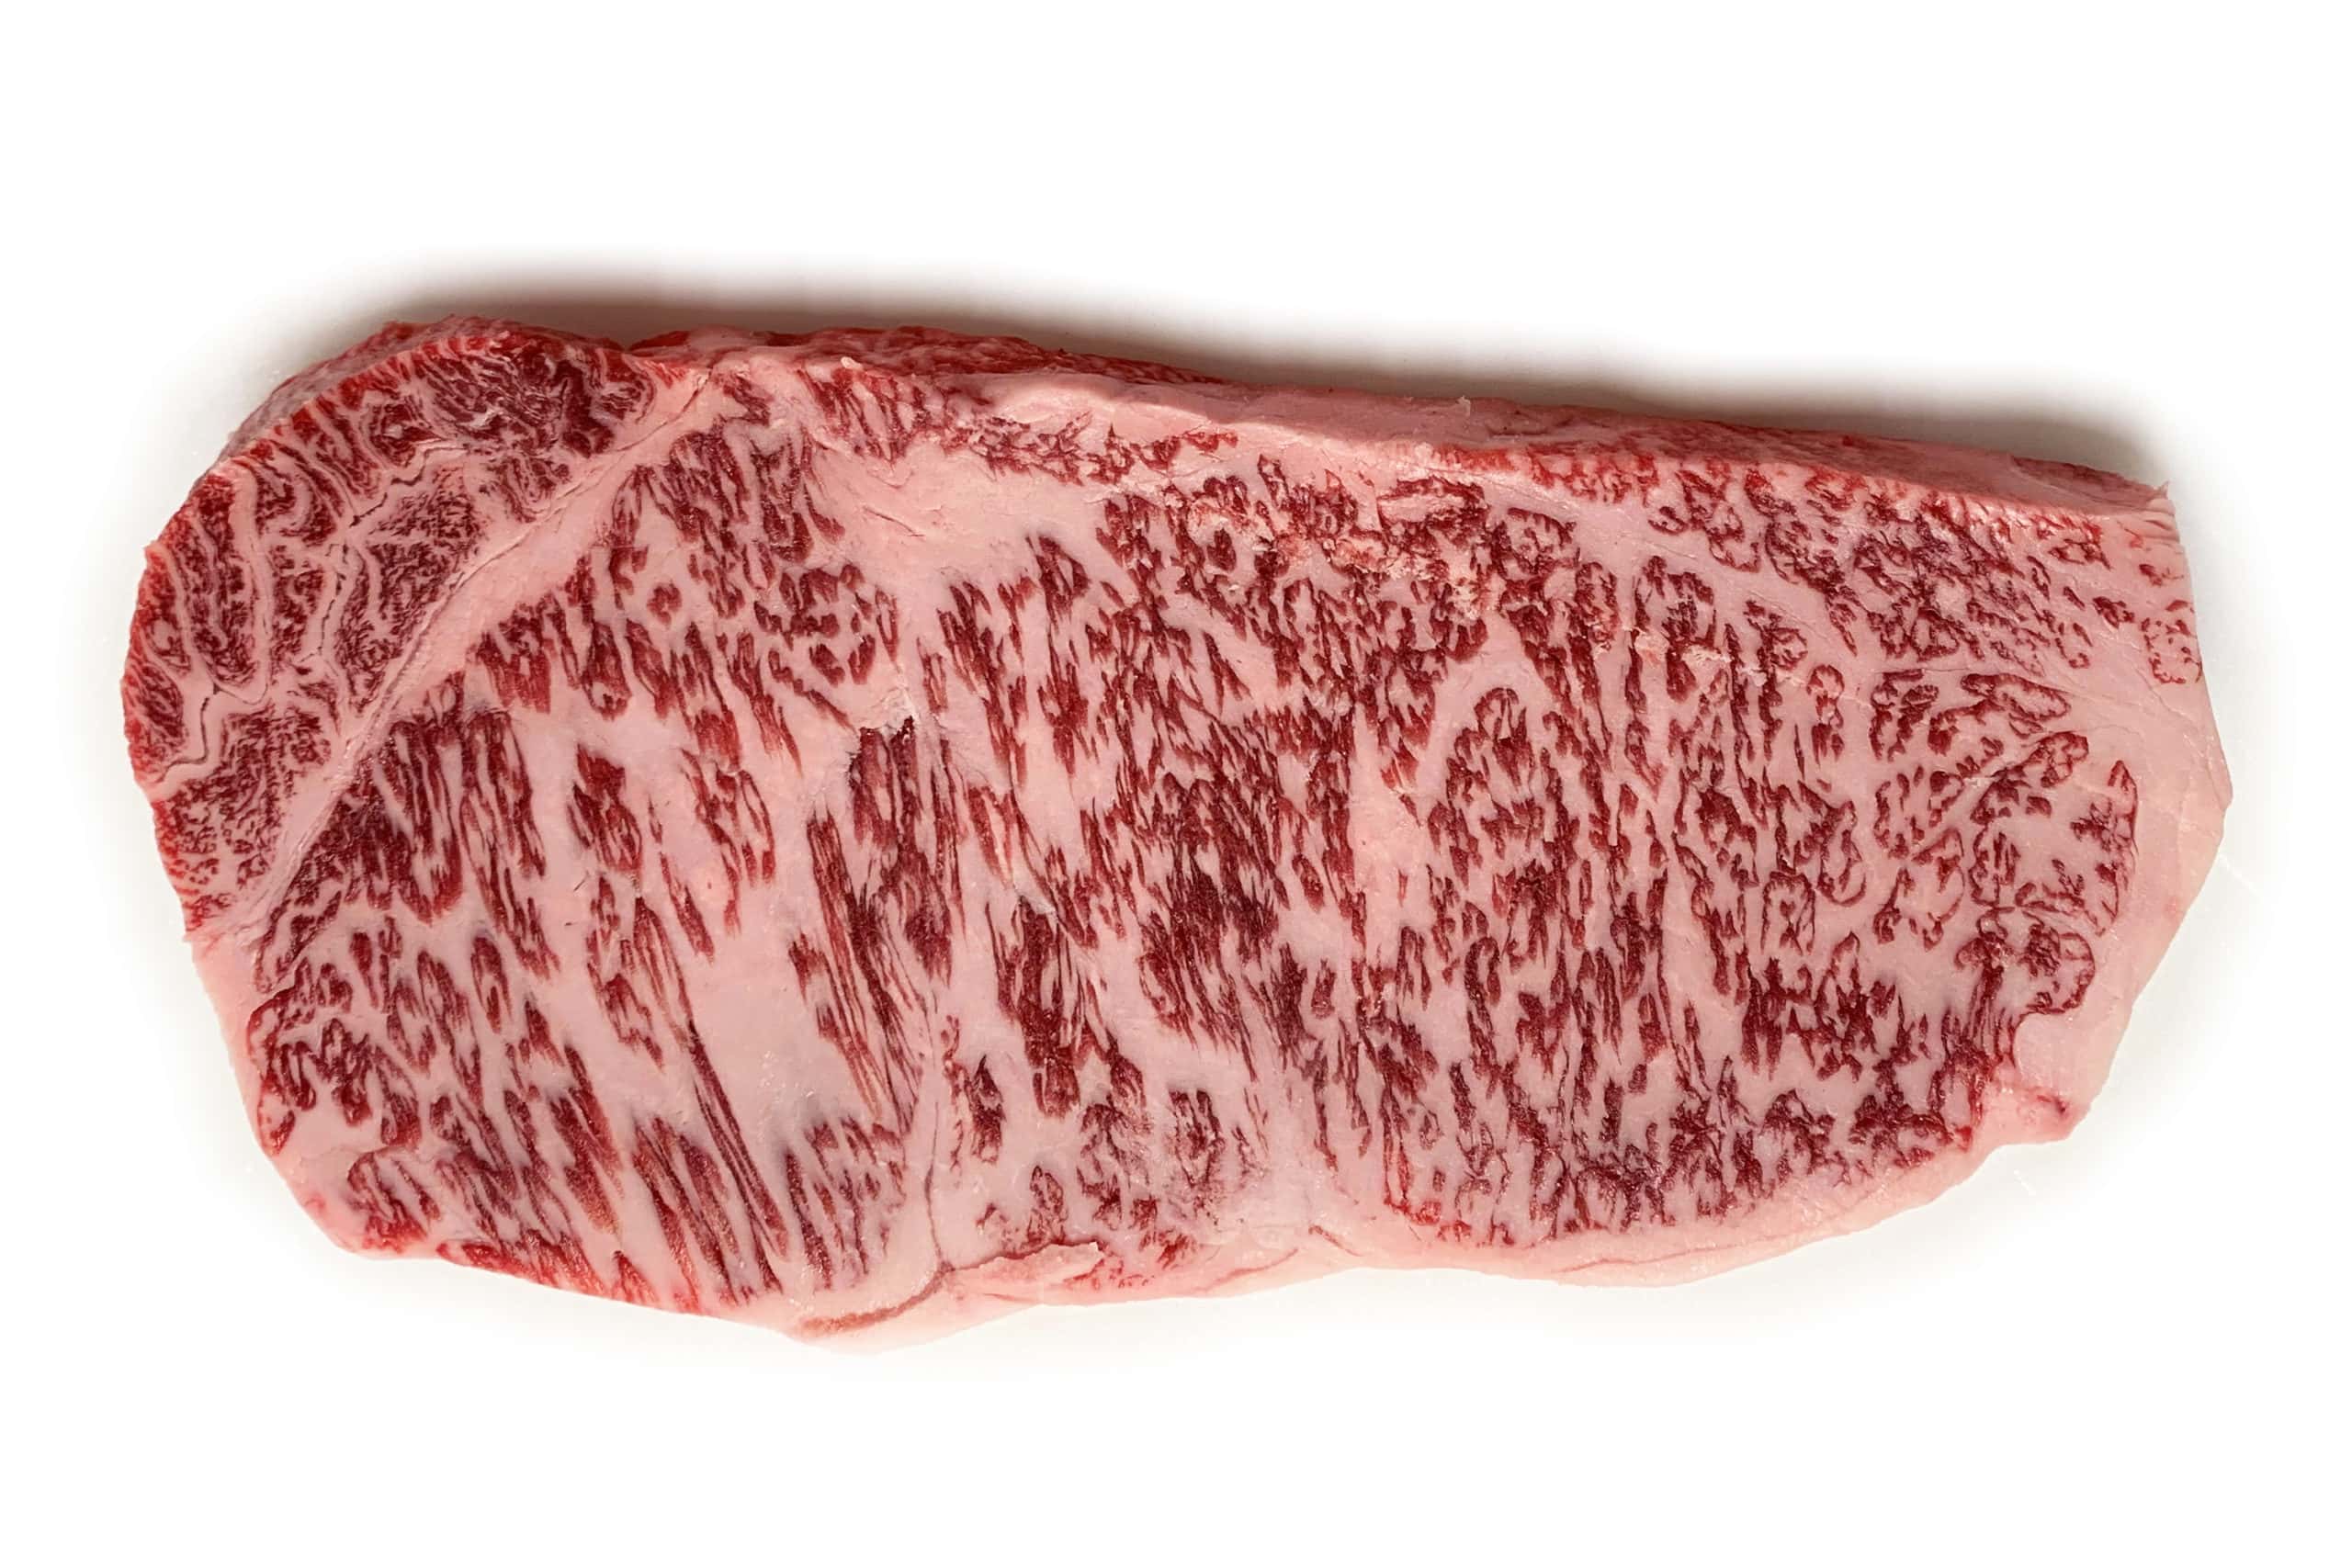 Japanese A5 Wagyu New York Strip Steak, 12oz - West Coast Prime Meats